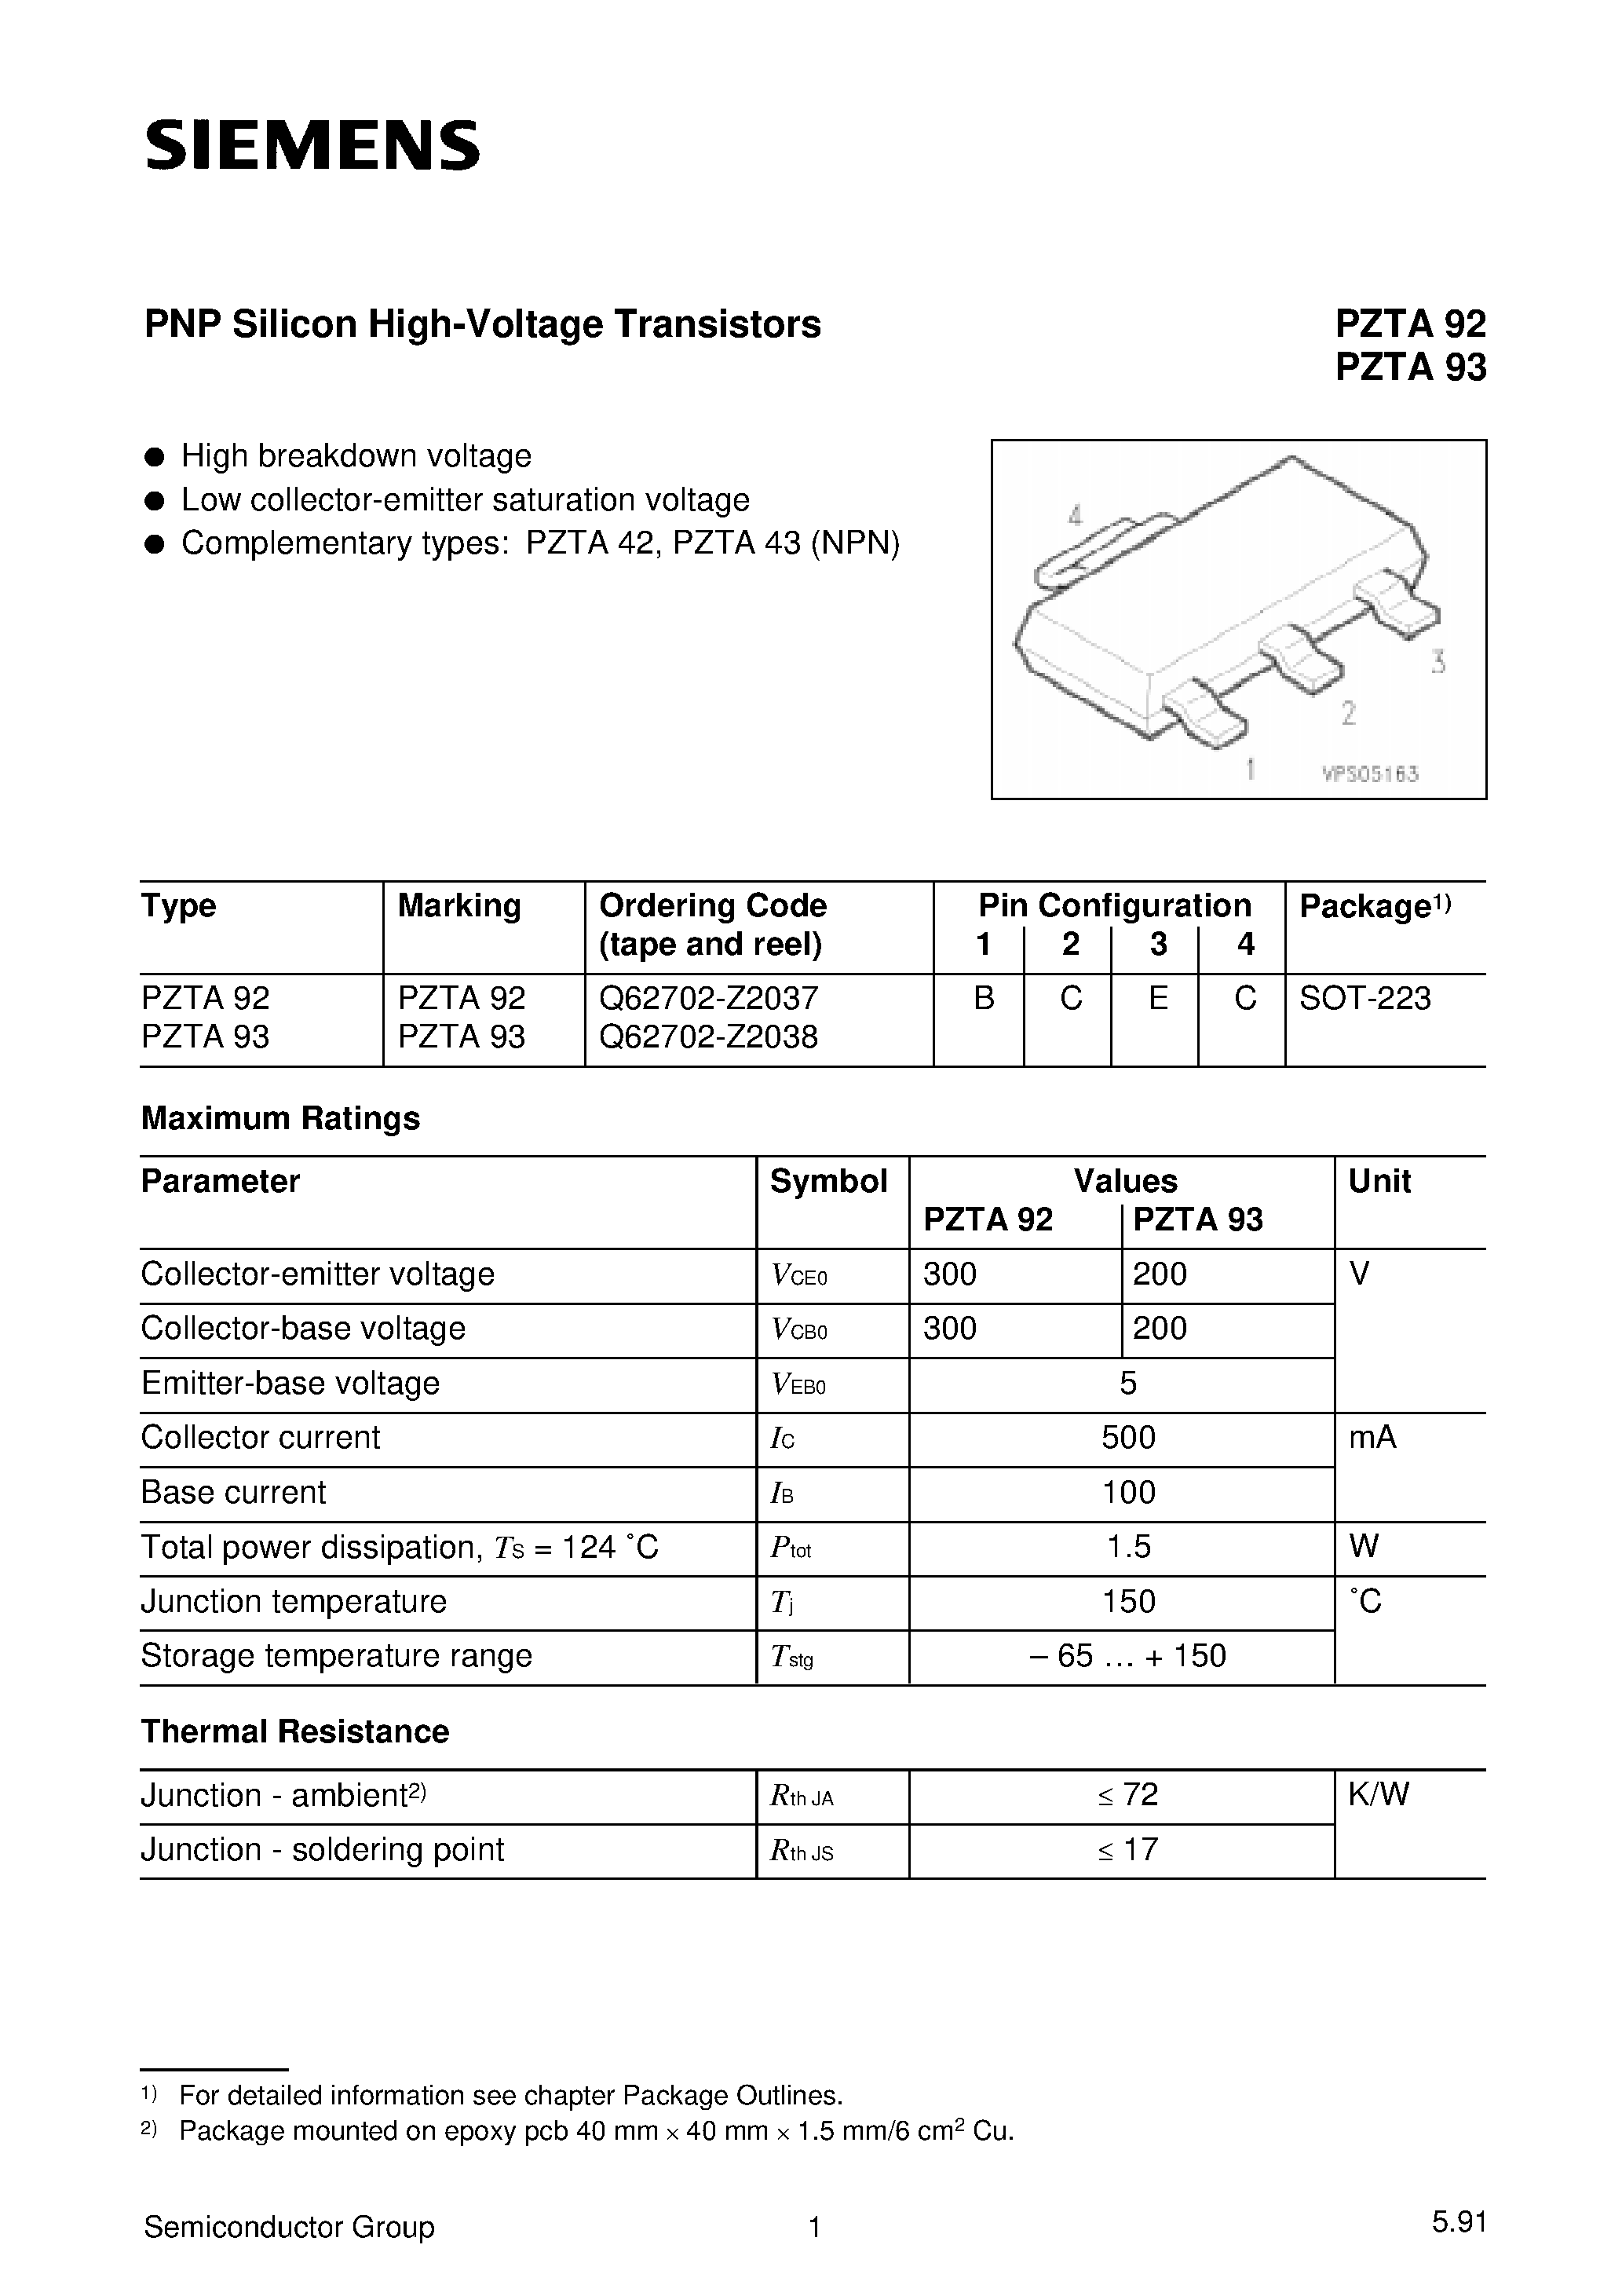 Datasheet PZTA93 - PNP Silicon High-Voltage Transistors page 1